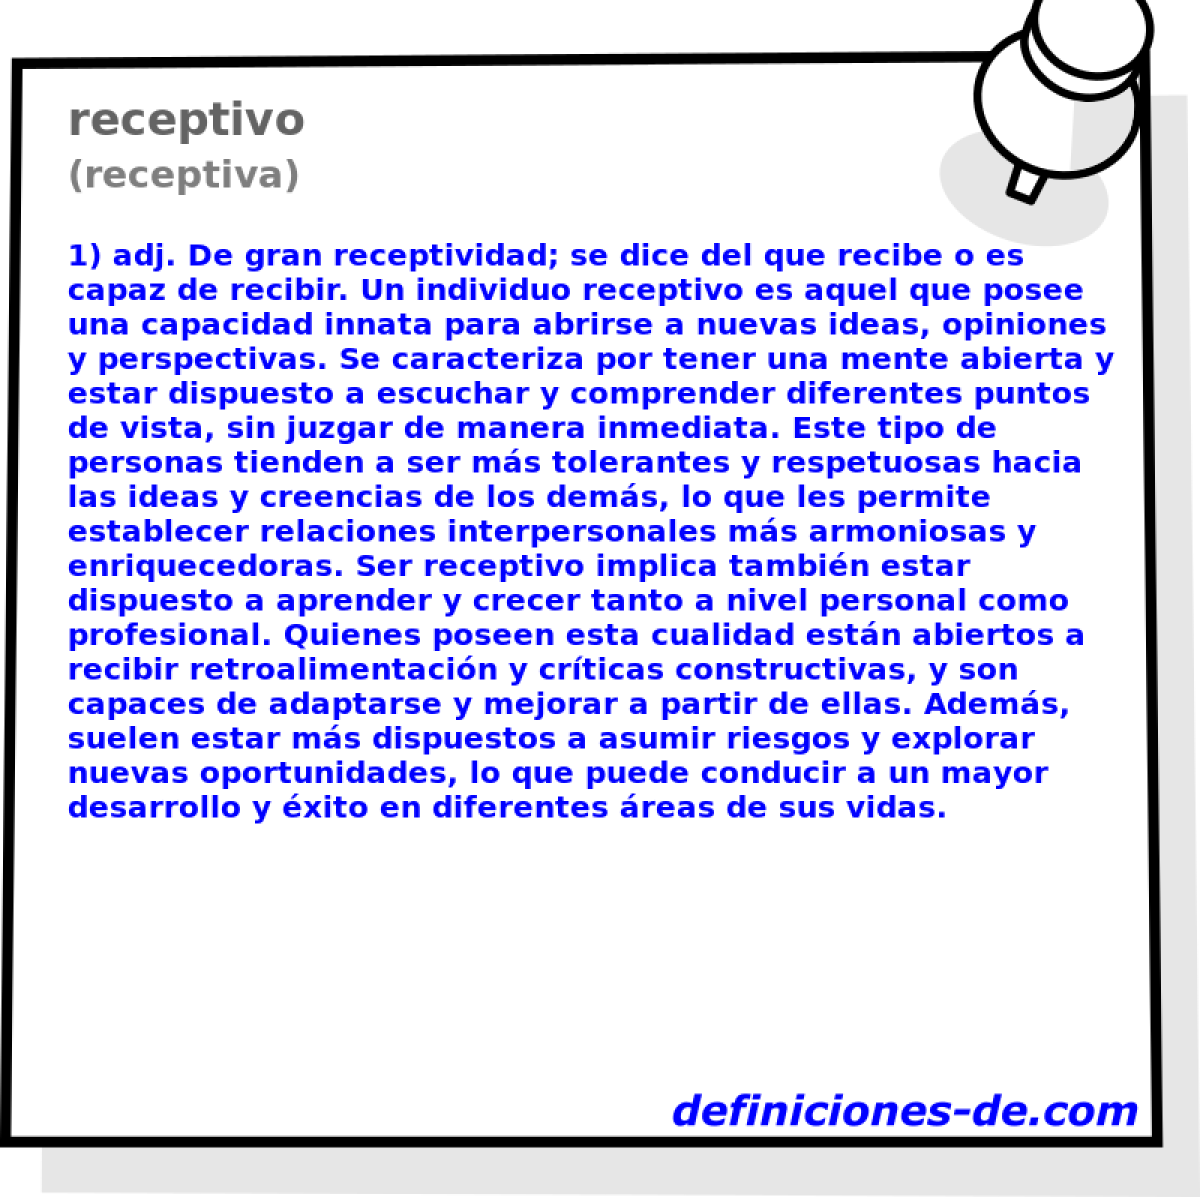 receptivo (receptiva)